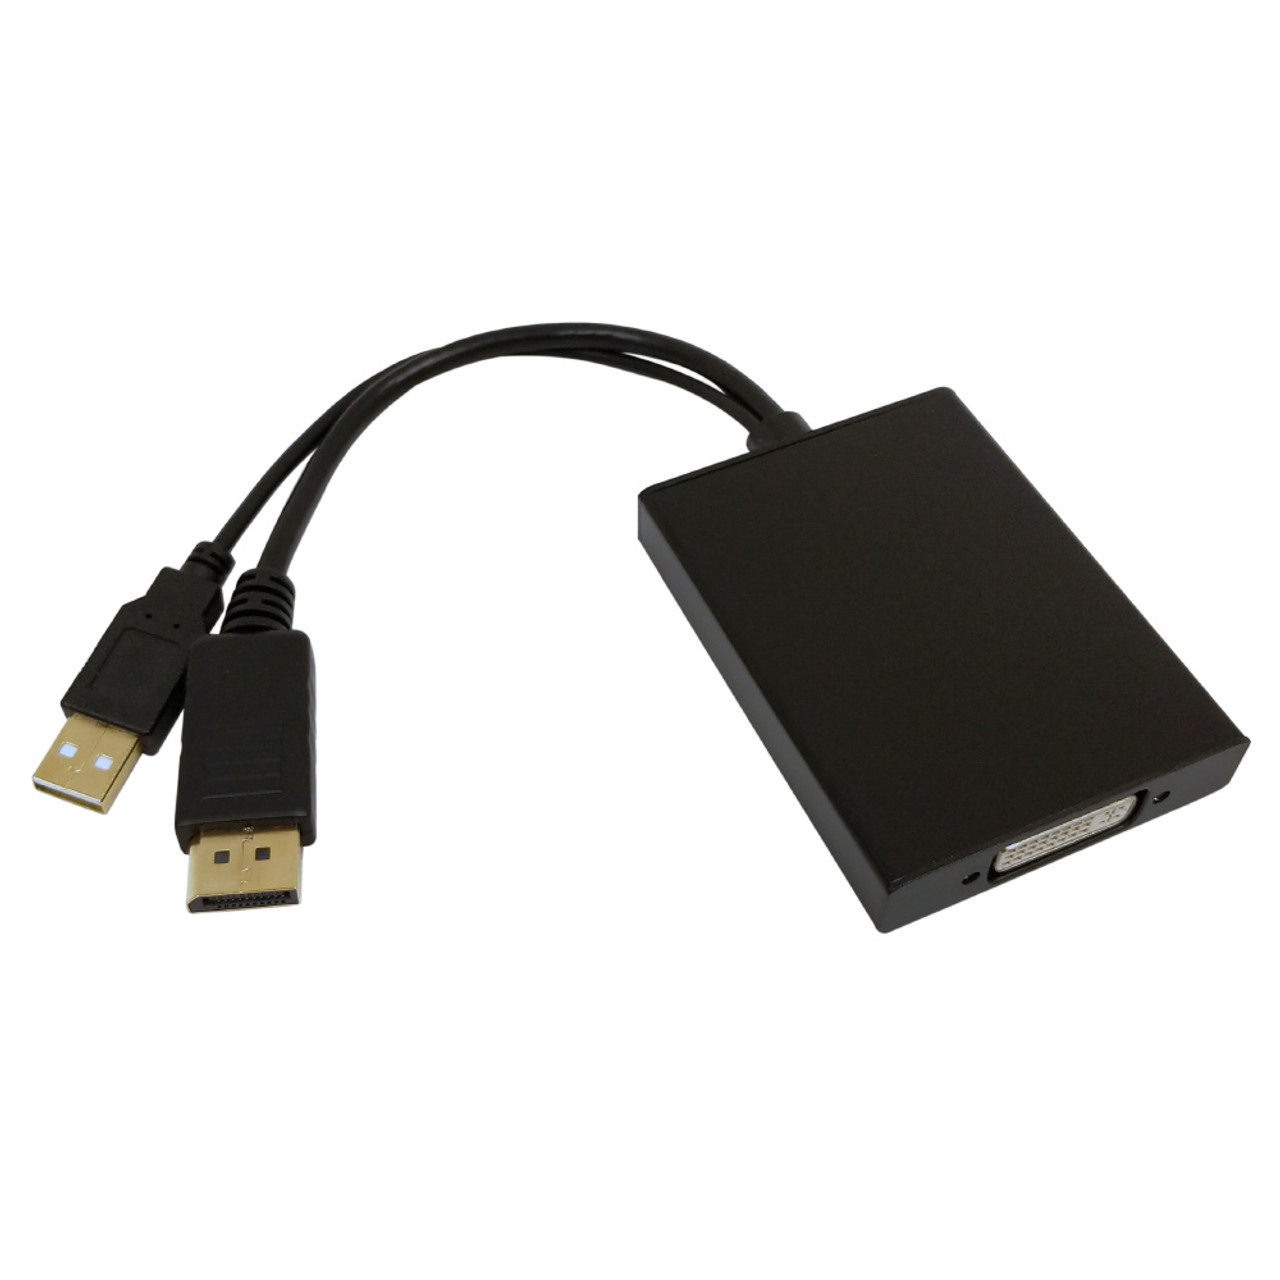 6 inch DisplayPort Male to DVI Dual Link Female Adapter Black 1